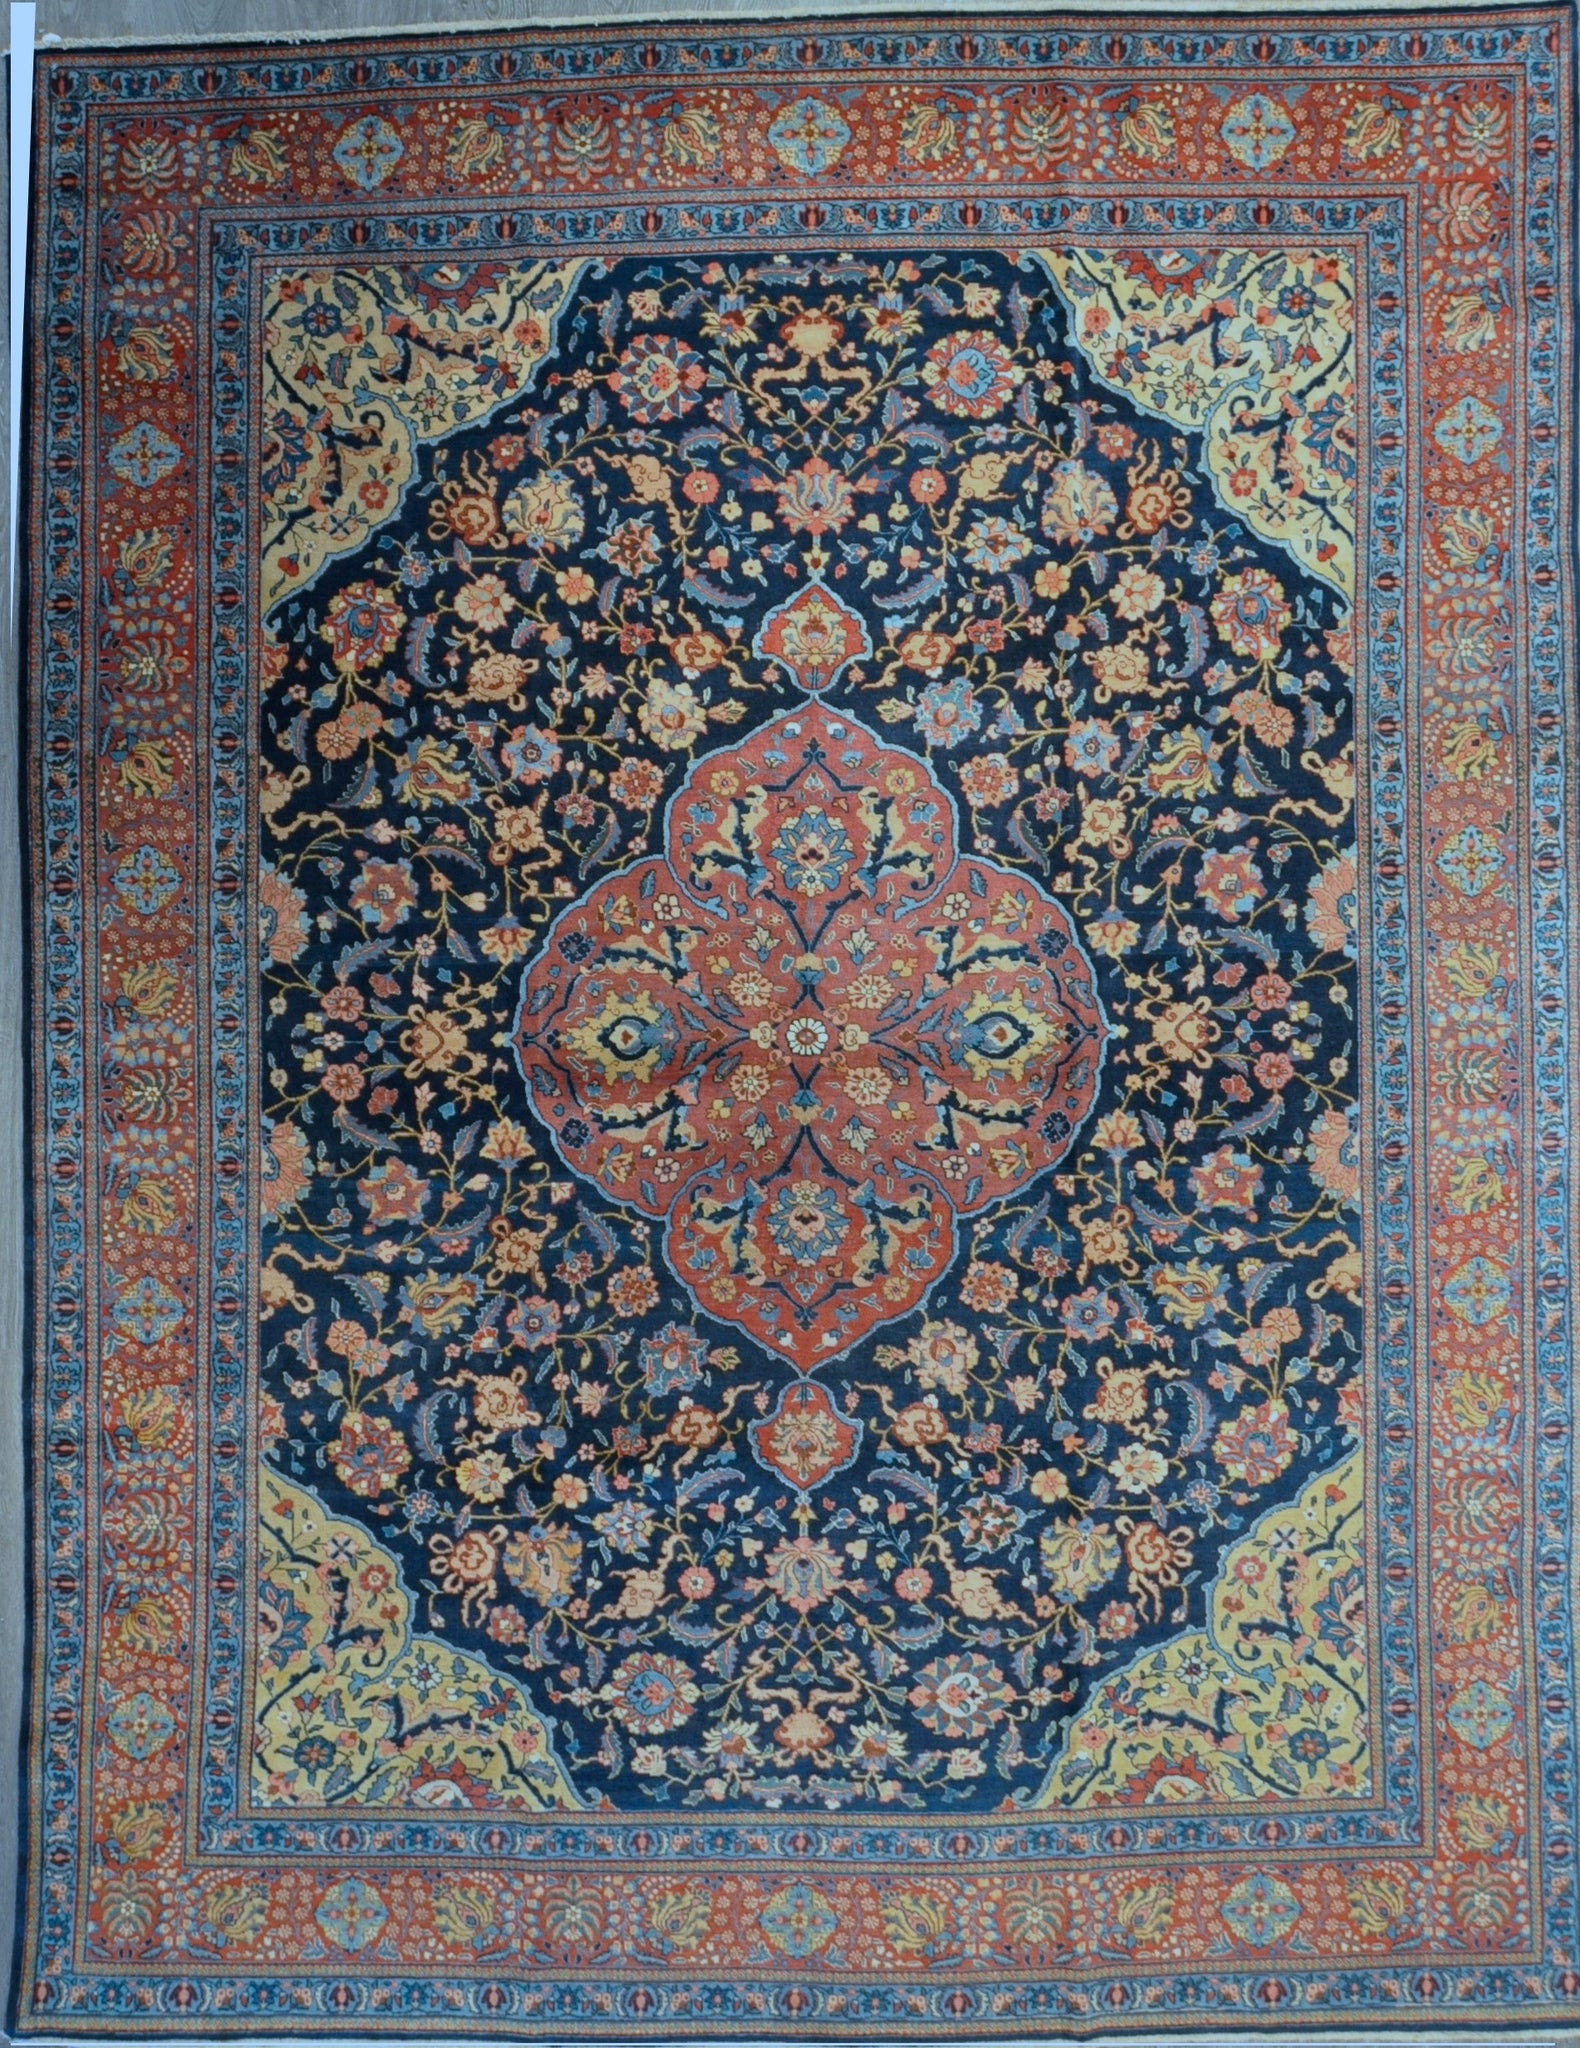 9.0x12.0 Antique persian tabriz #23038 Sold